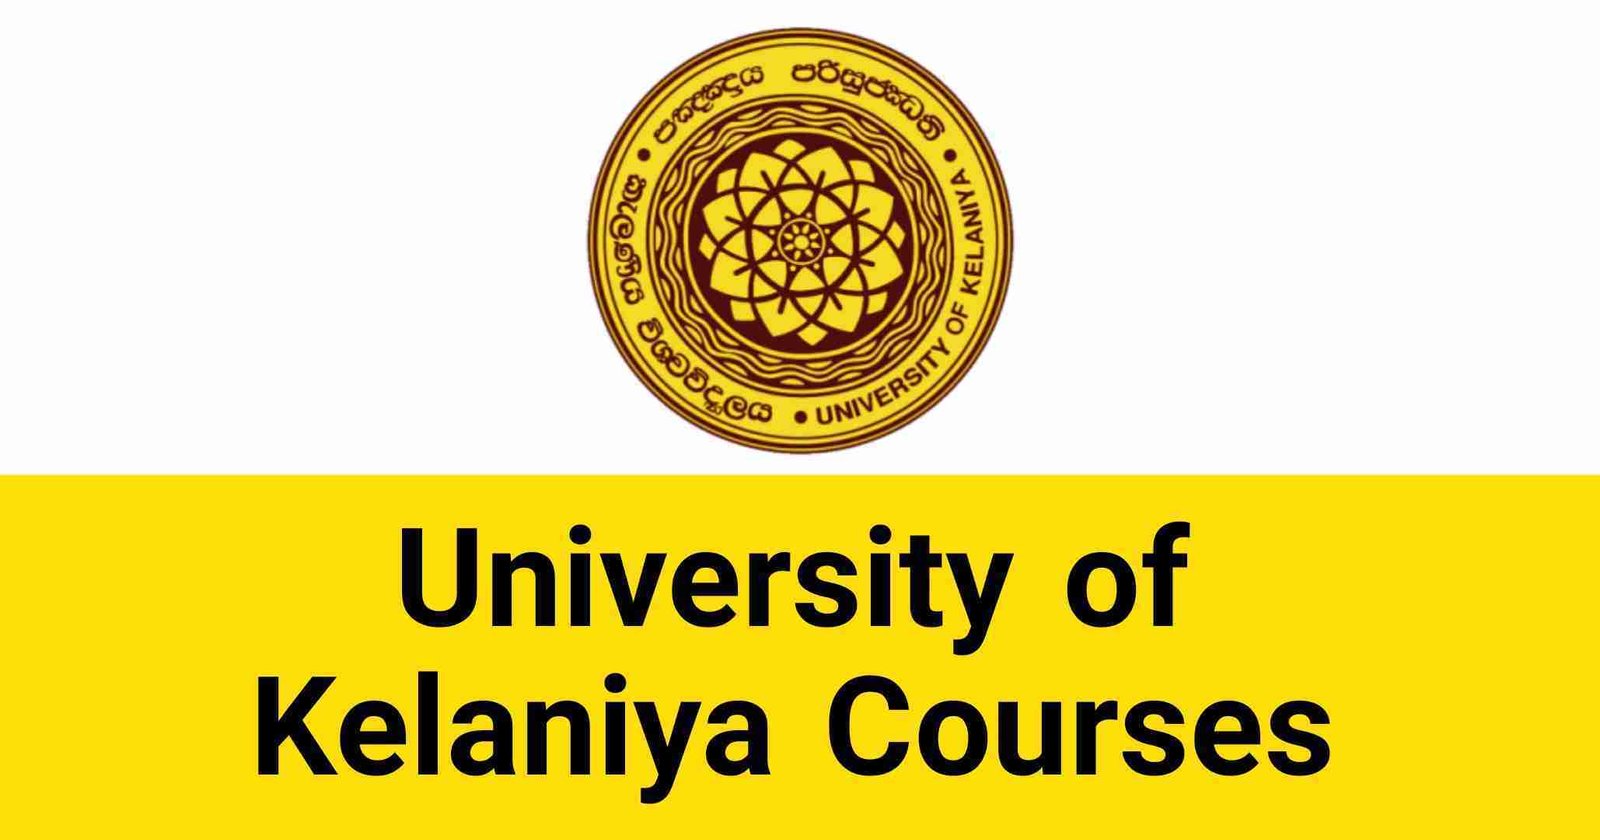 University of Kelaniya Courses